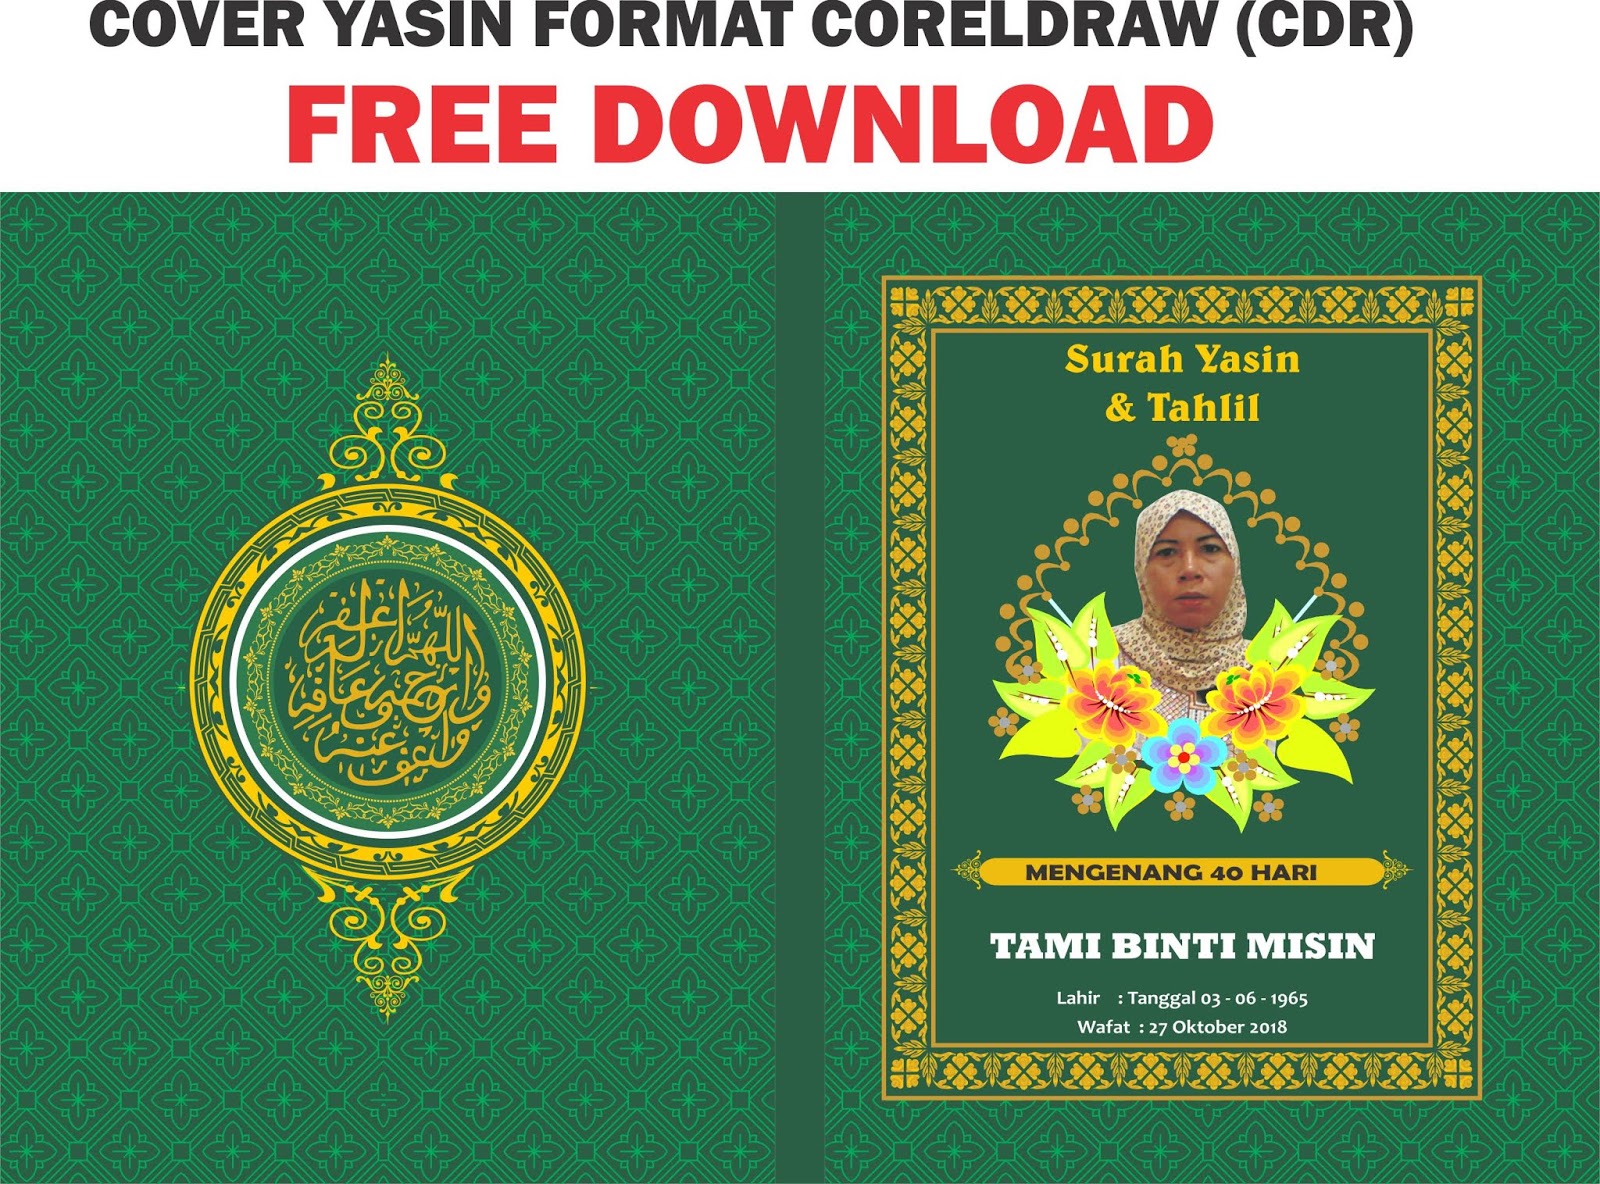 Download Cover Yasin Format Coreldraw